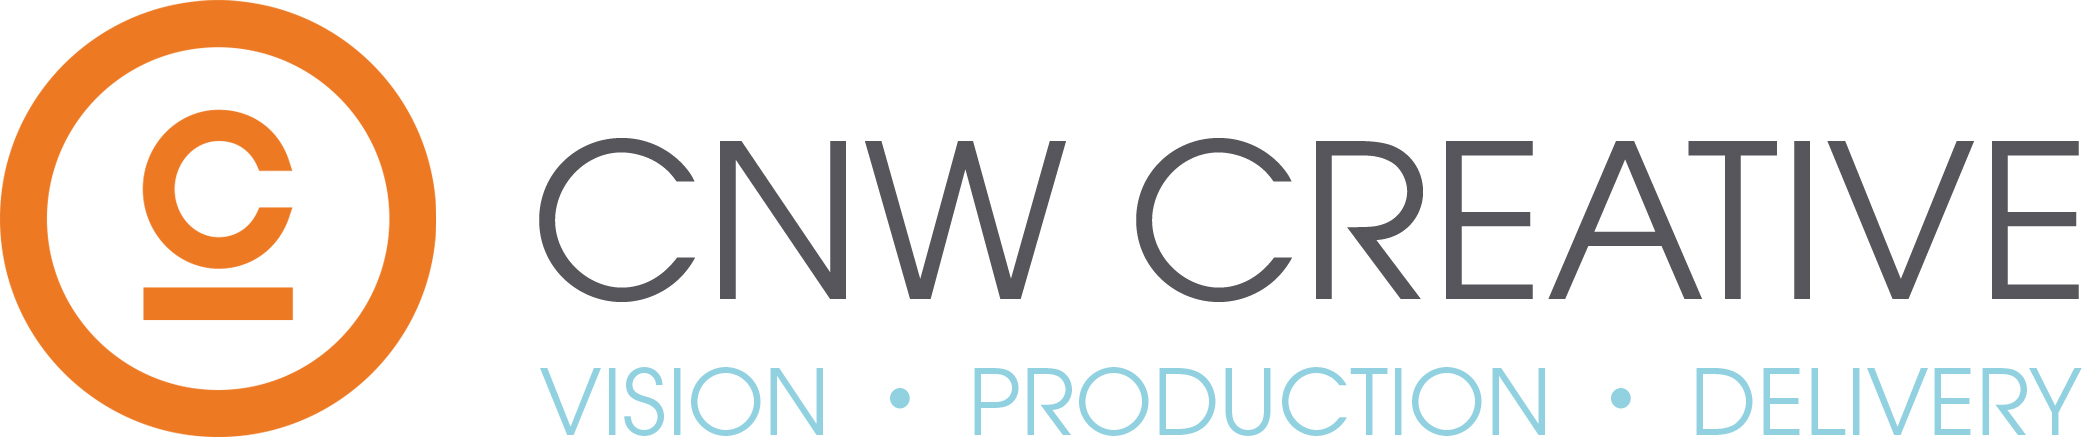 CNW Creative logo